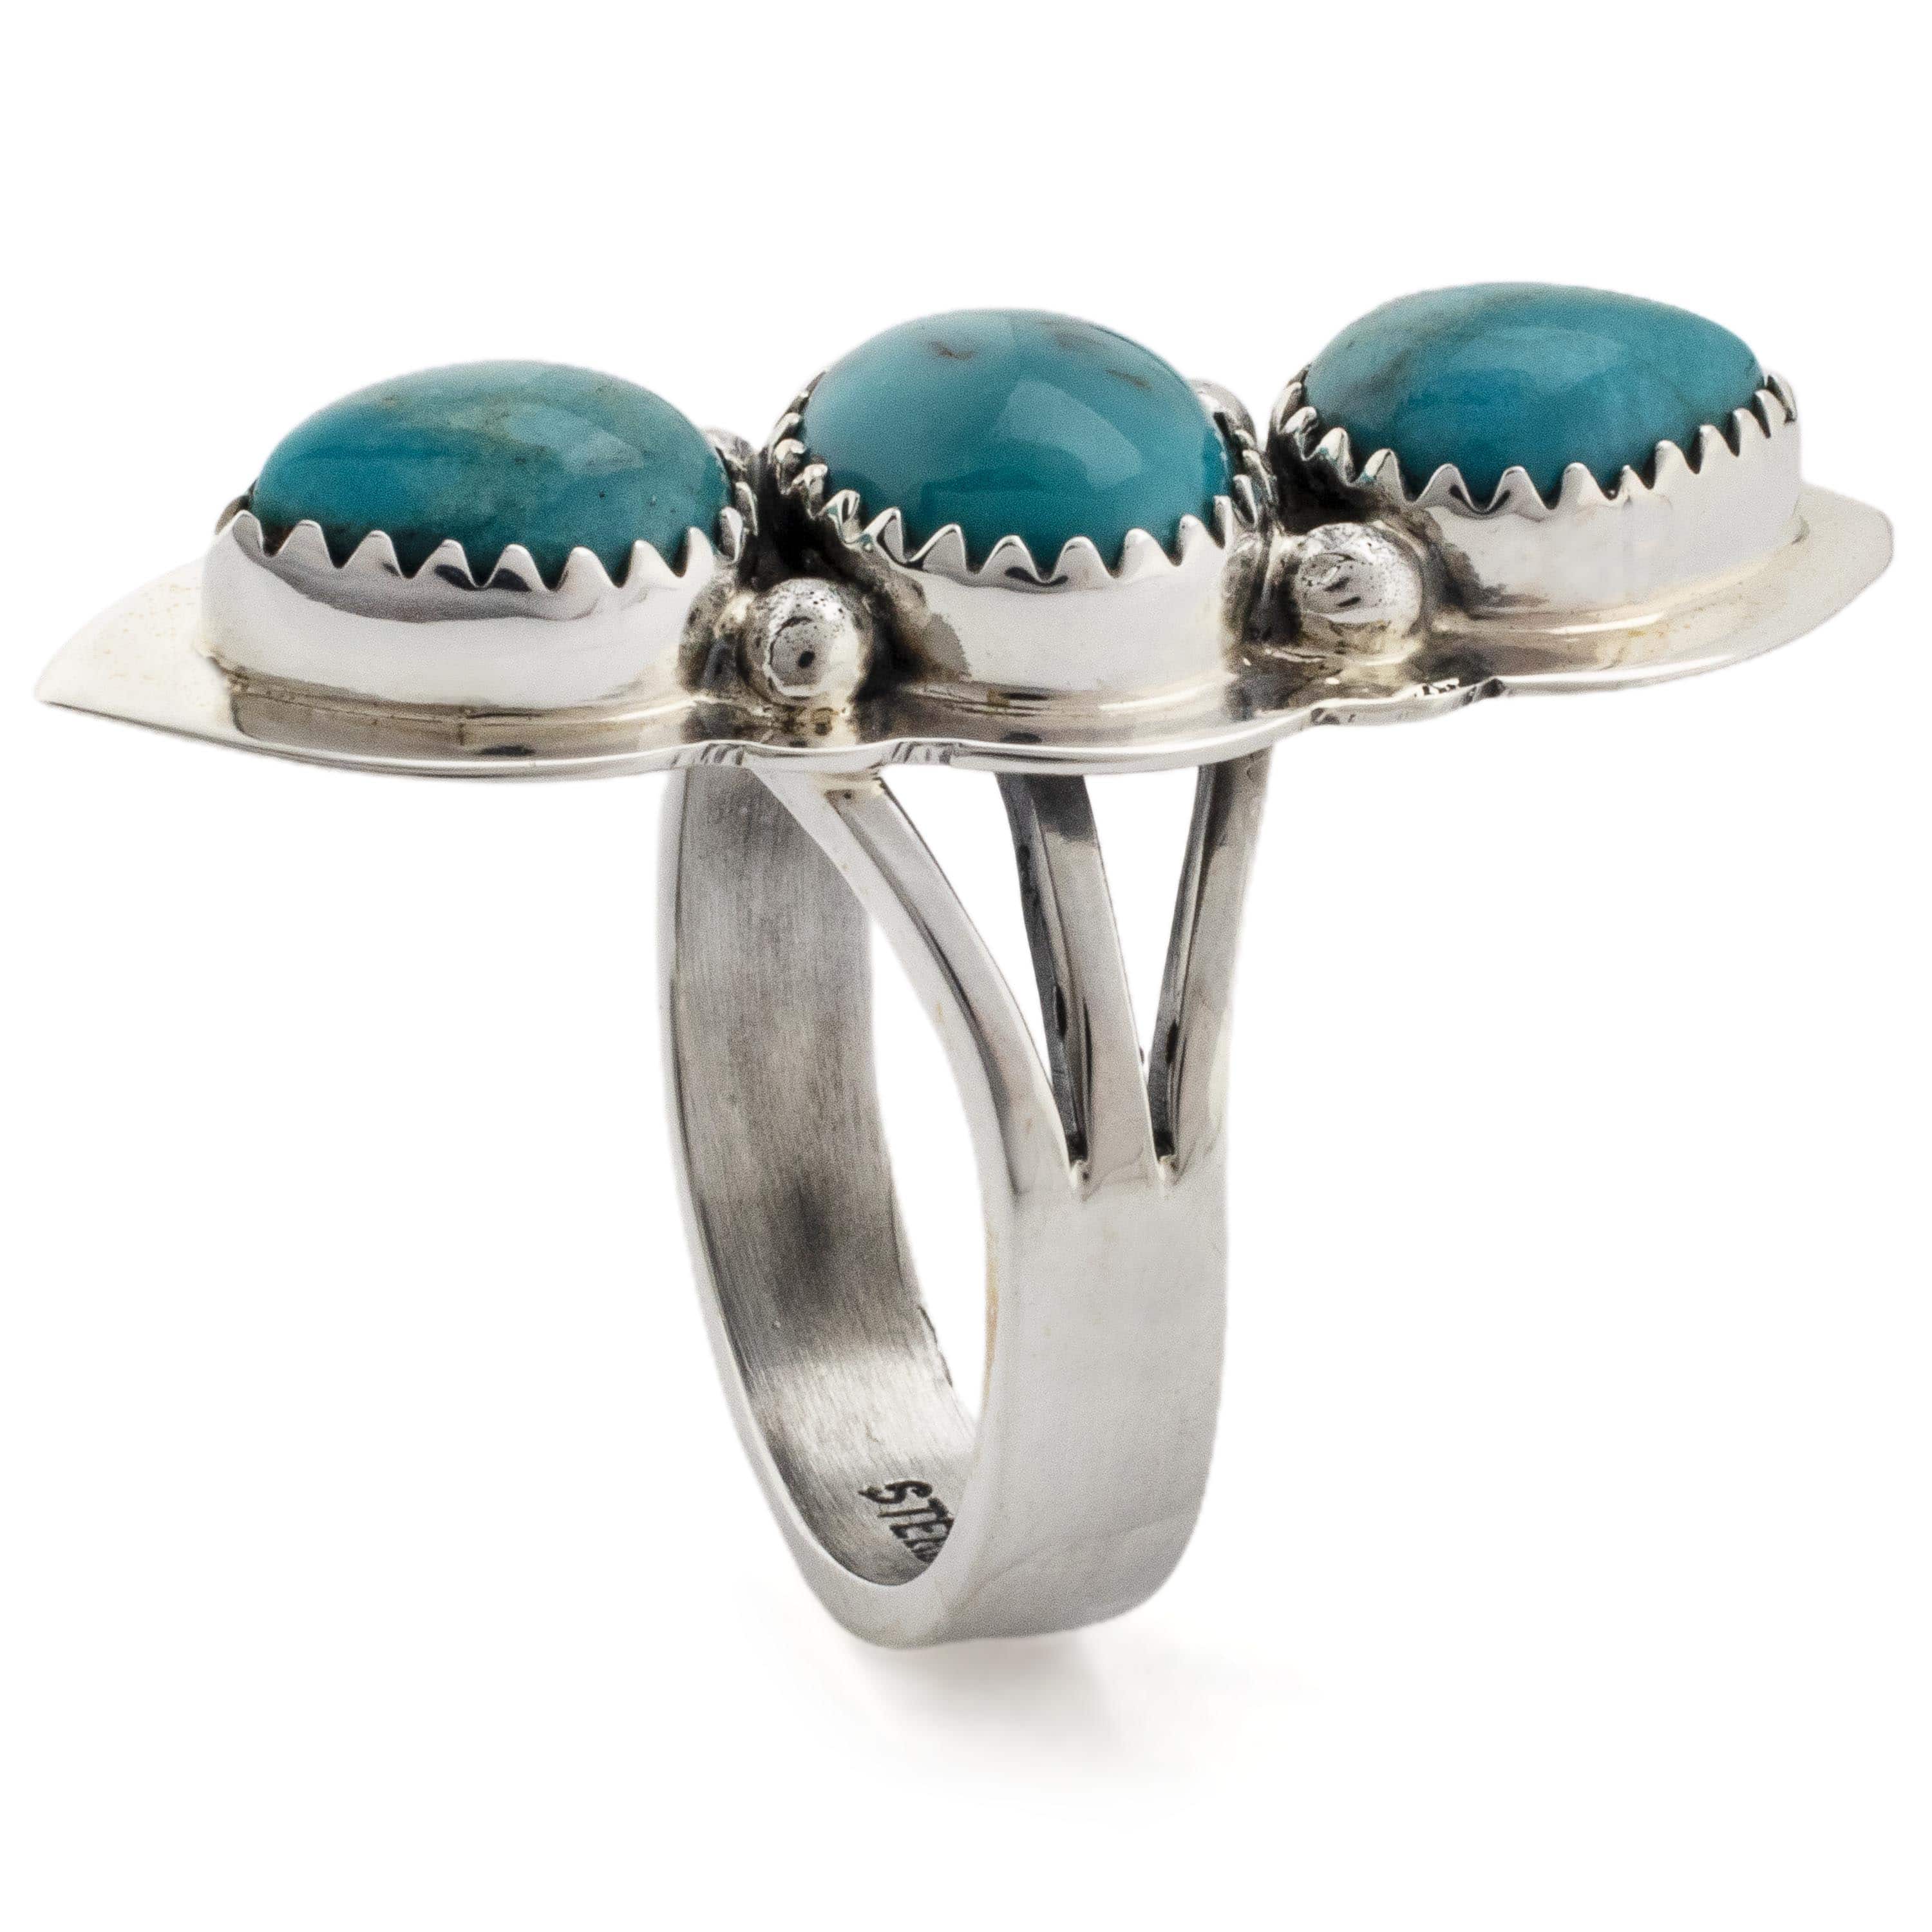 Kalifano Native American Jewelry 8 Triple Stone King Manassa Turquoise USA Handmade 925 Sterling Silver Ring NAR350.012.8